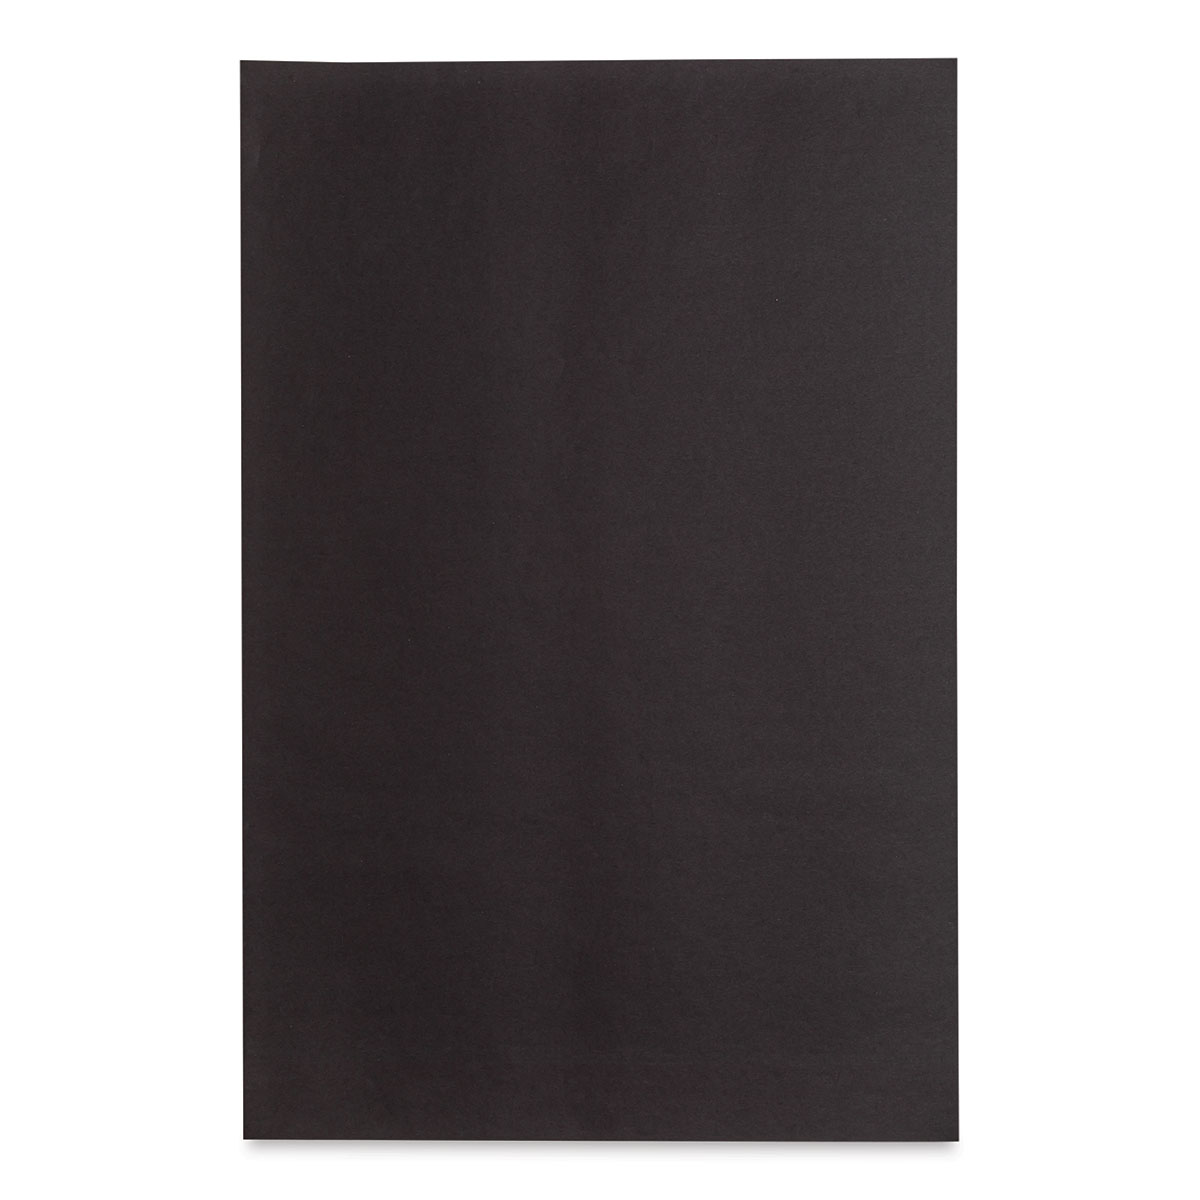 Pacon Tru-Ray 18 x 24 Construction Paper Black 50 Sheets (P103093)